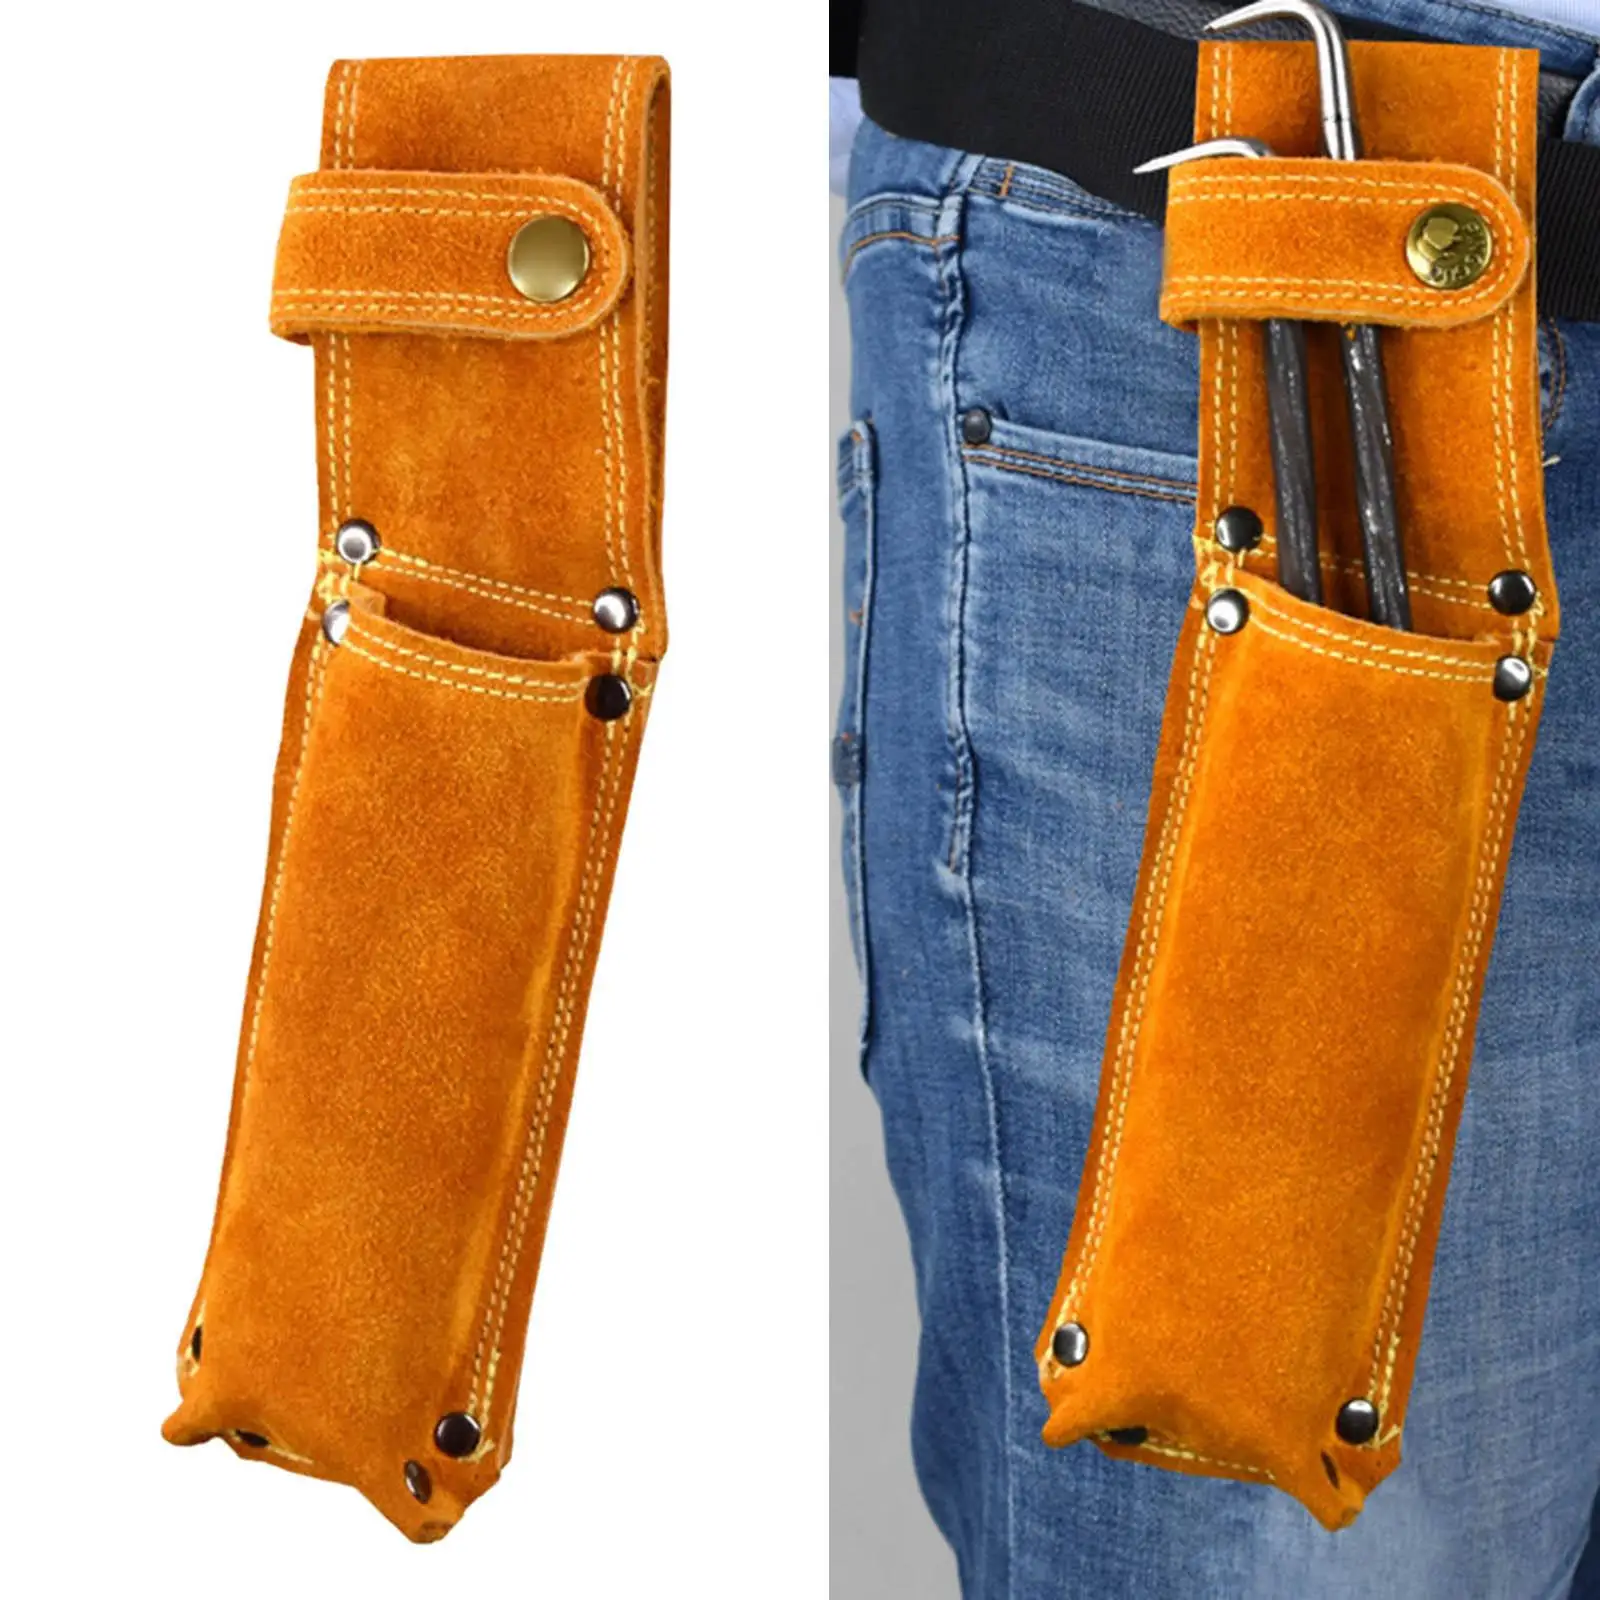 Waist Bag Portable Tough Wear-Resistant Prevent Puncture for Game Climbing